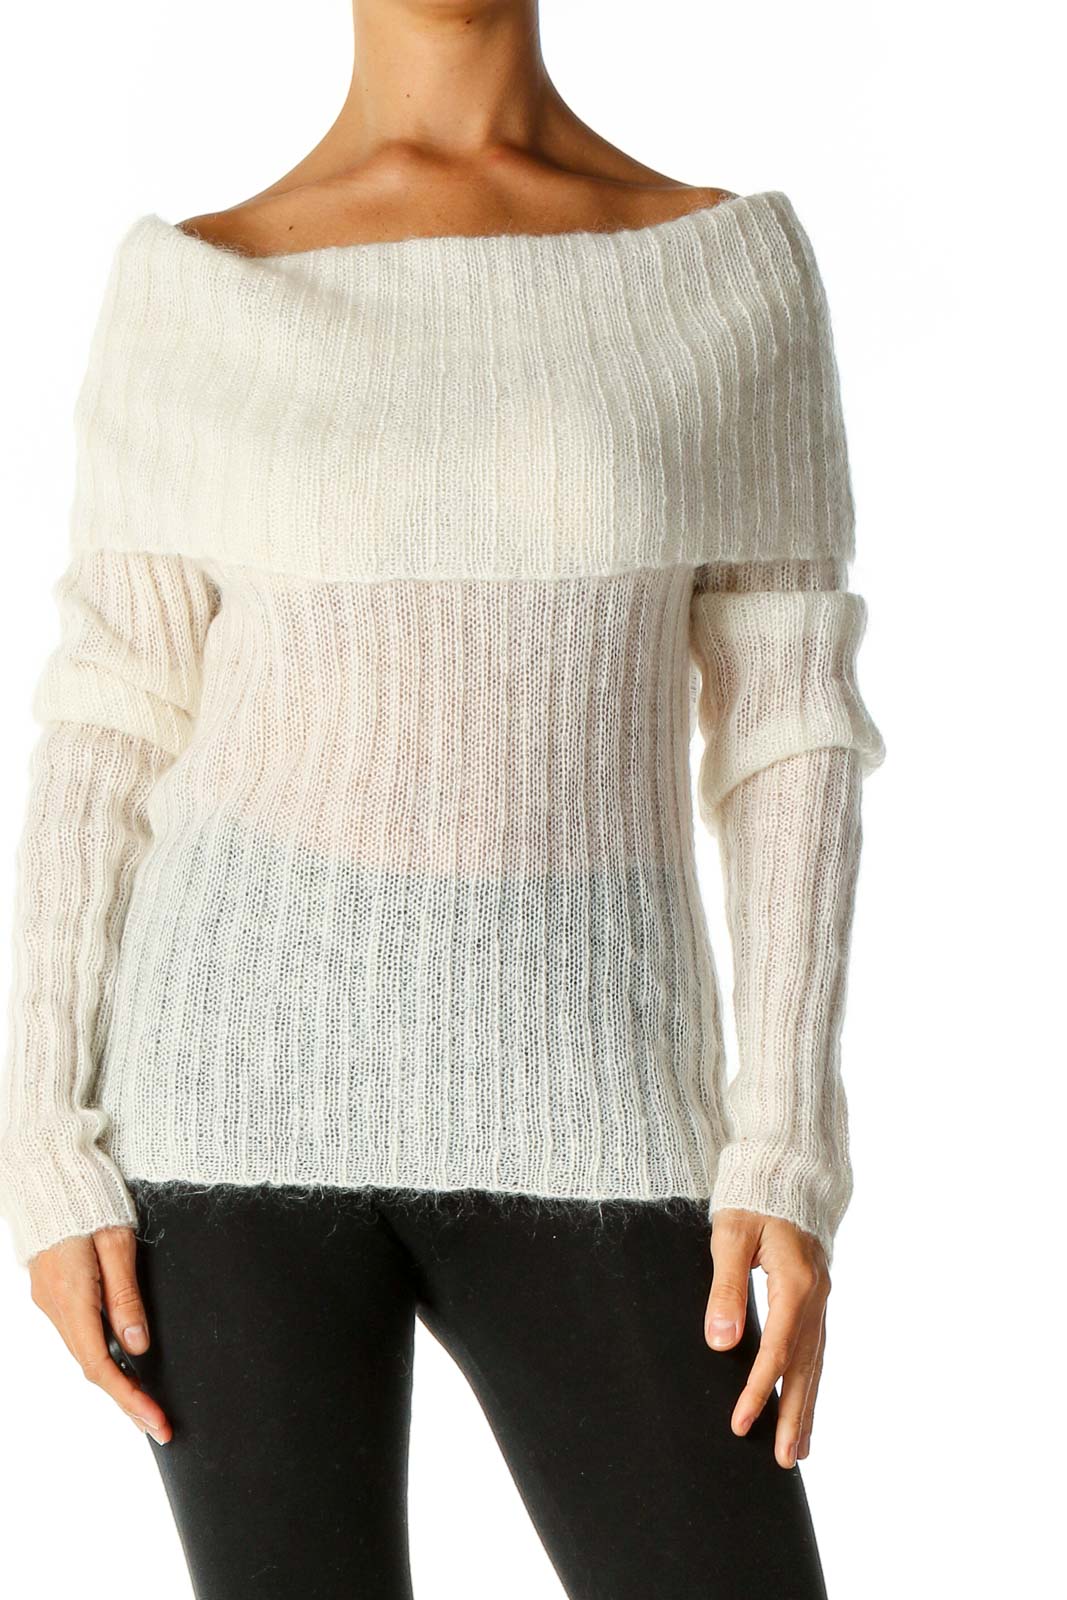 Beige Solid Retro Sweater Front